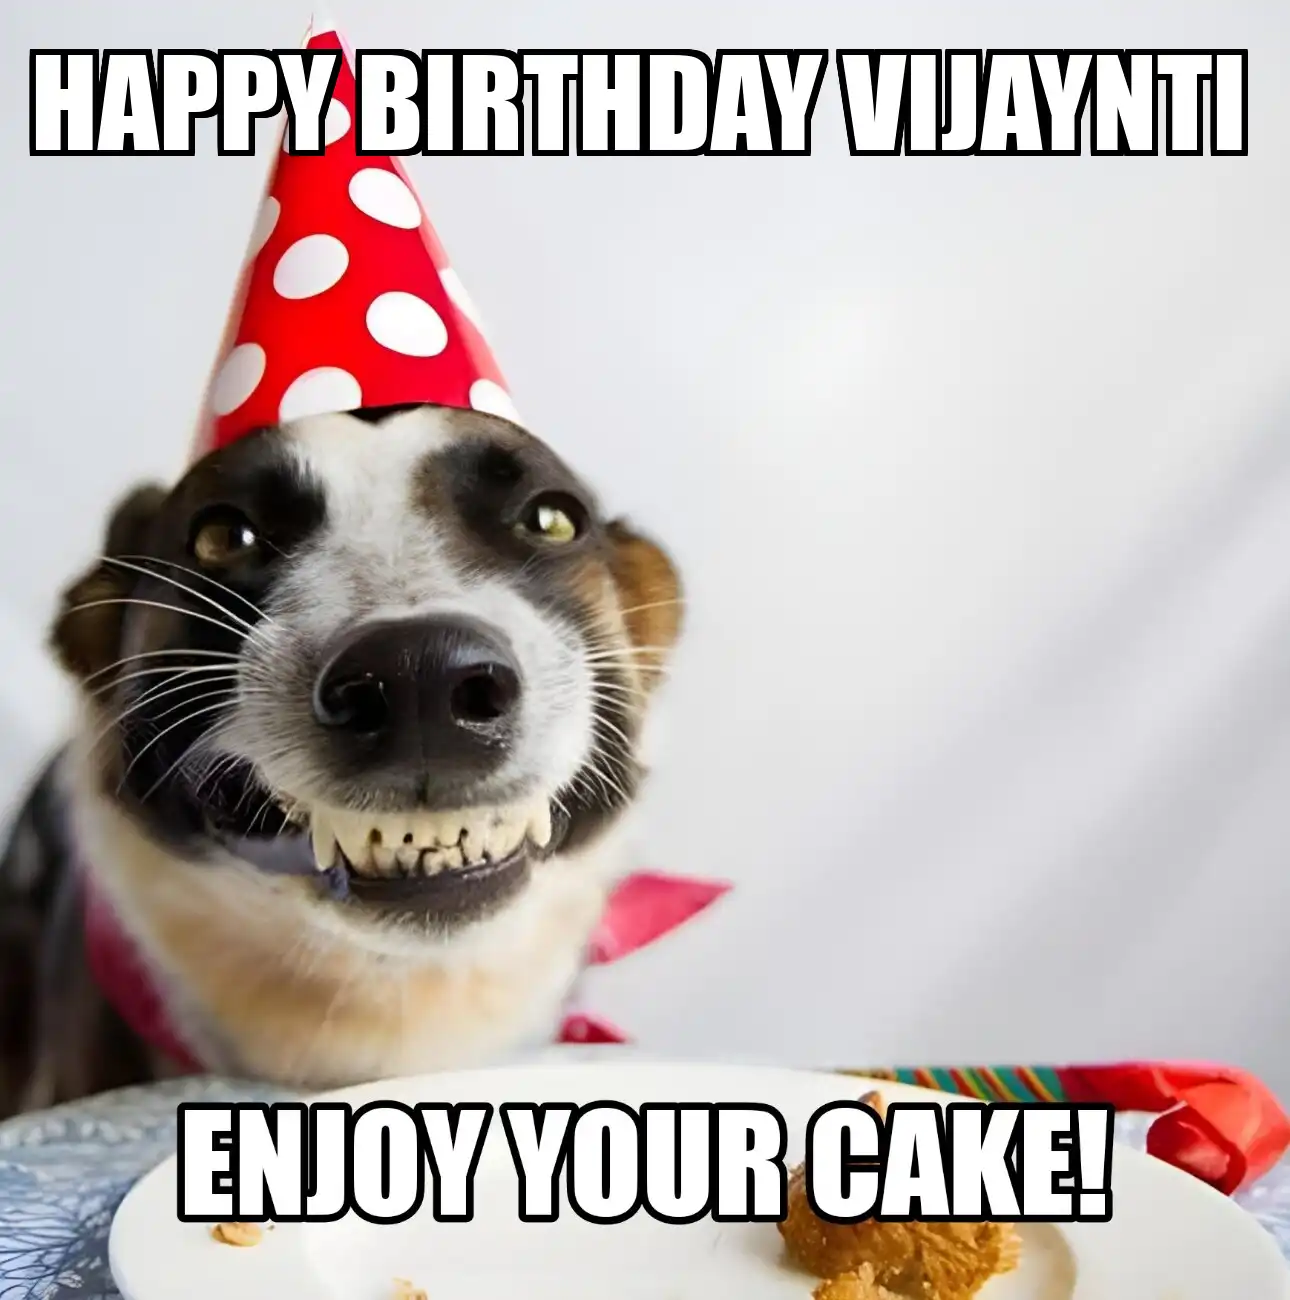 Happy Birthday Vijaynti Enjoy Your Cake Dog Meme